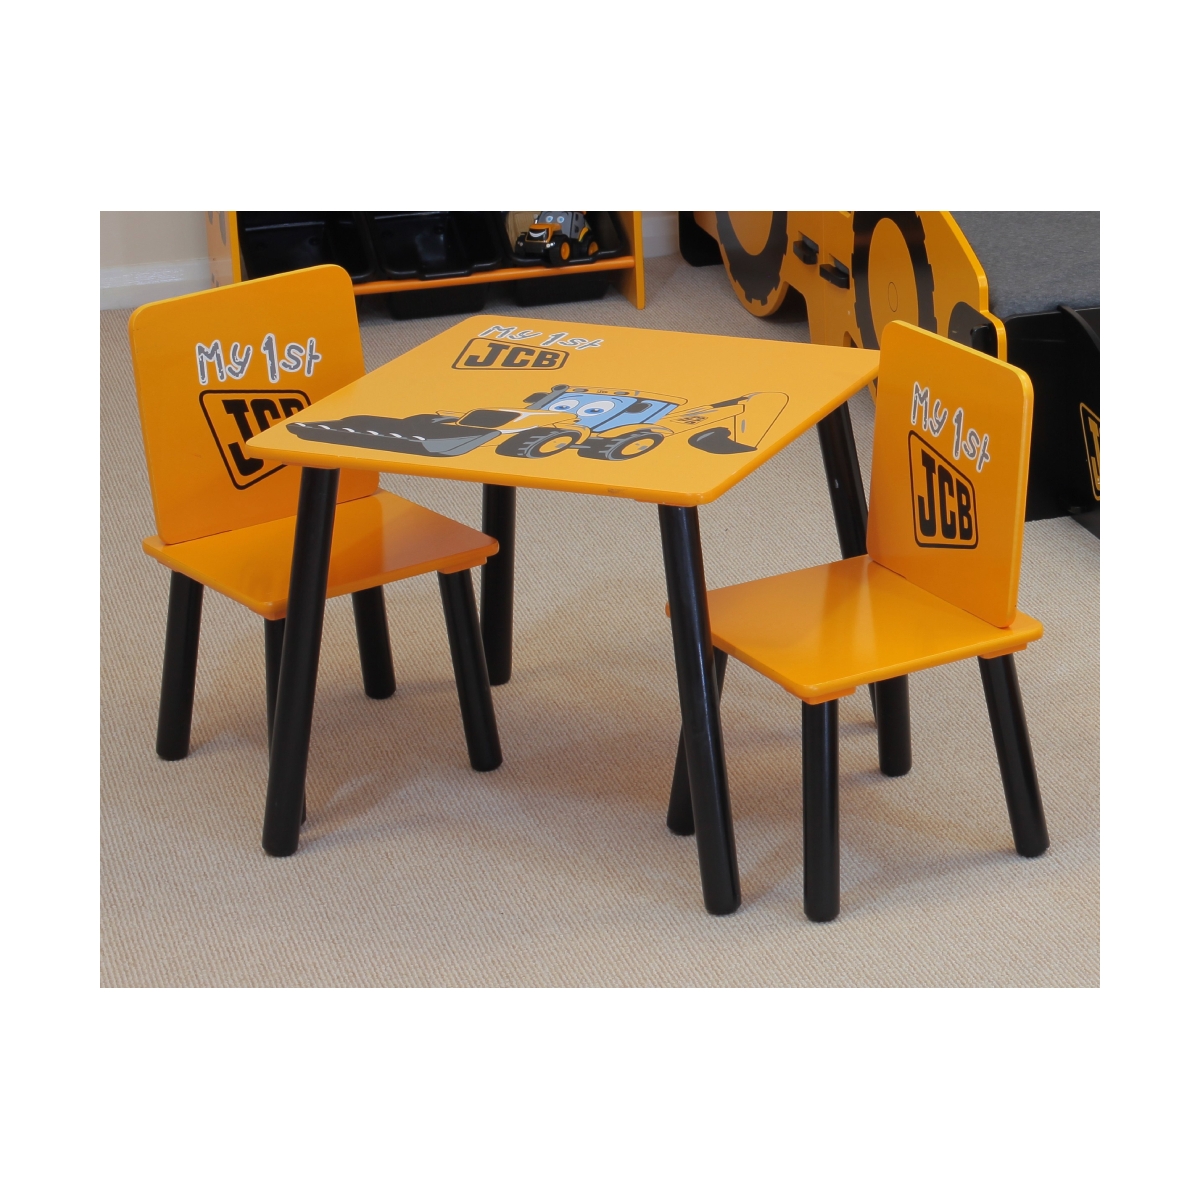 Kidsaw Joey JCB Table & 2 Chairs